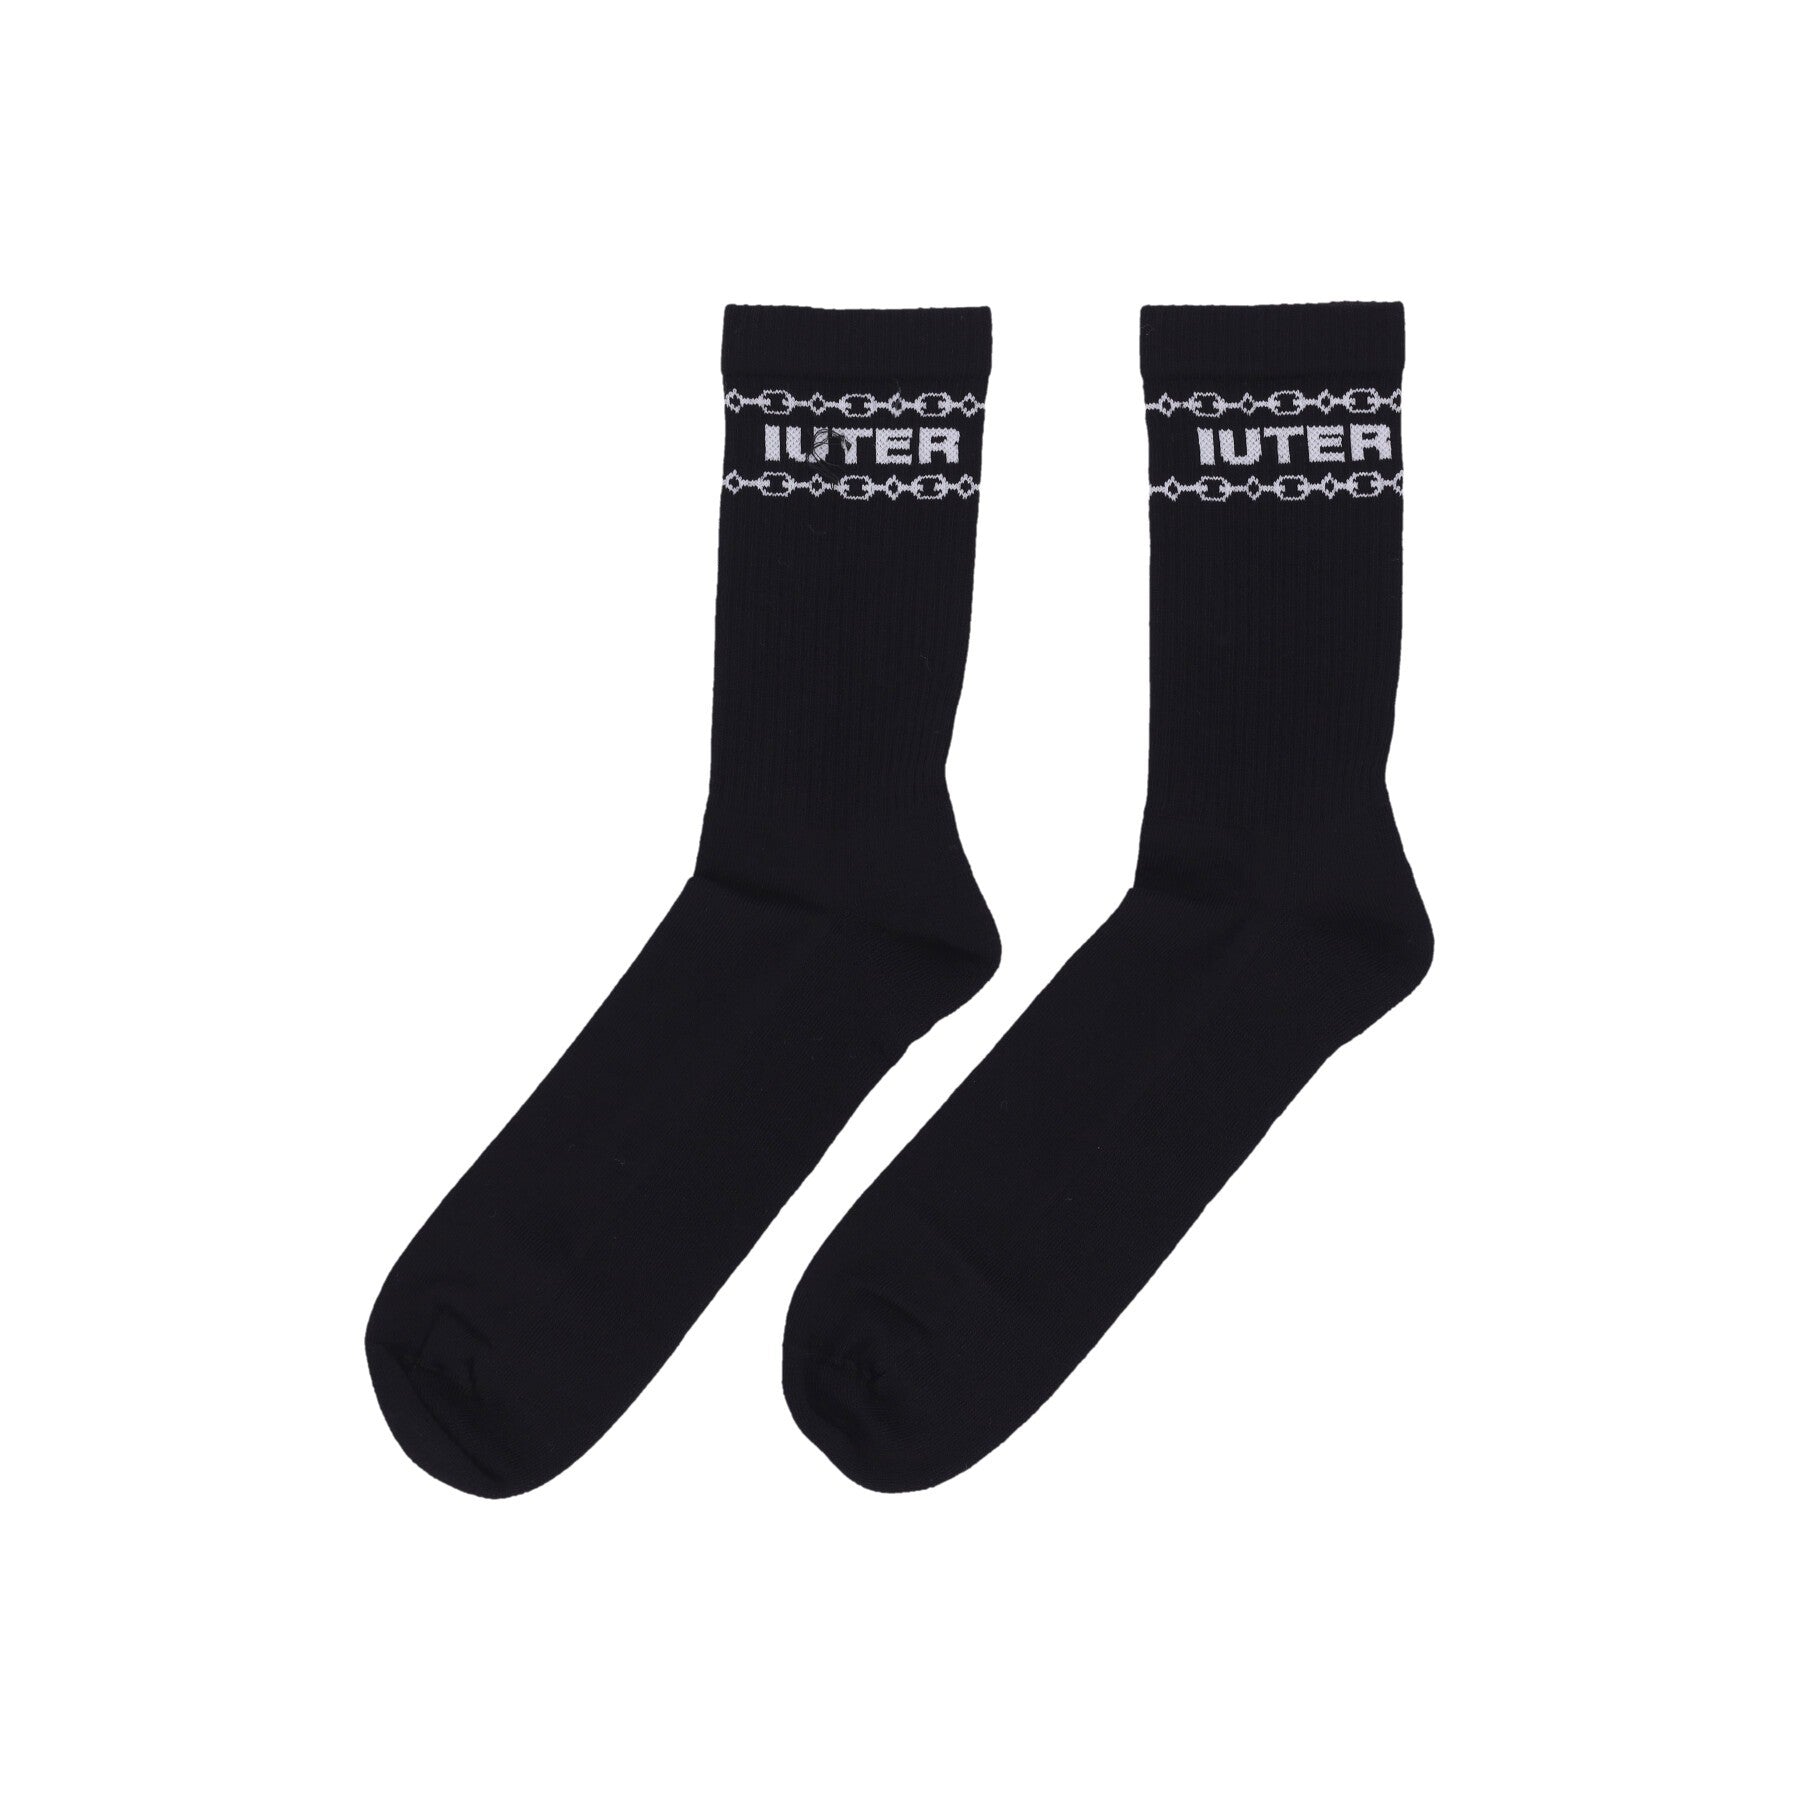 Iuter, Calza Media Uomo Chain Socks, Black